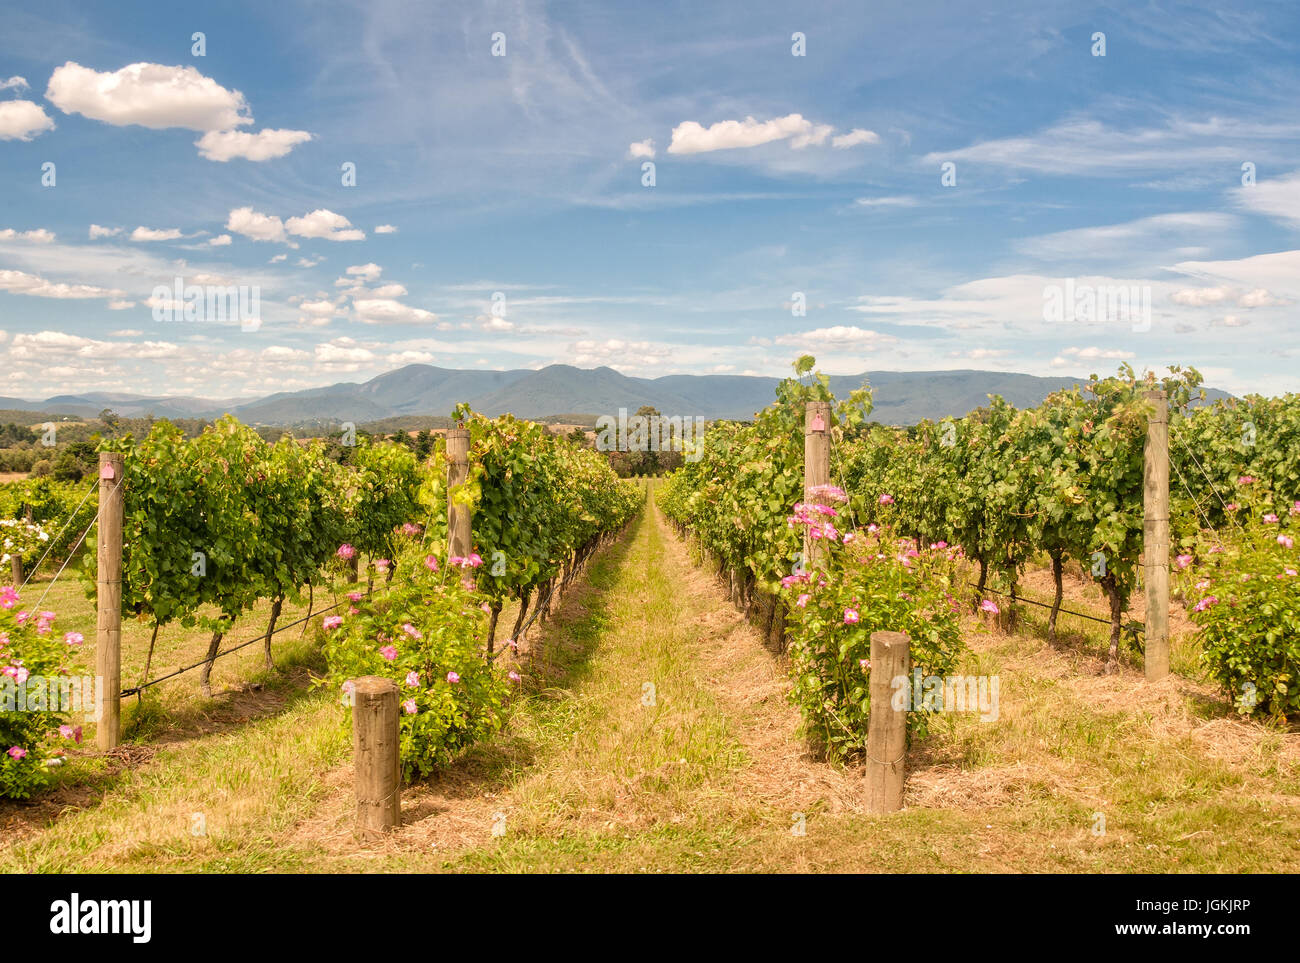 Rows of vines in a Yarra Valley vineyard - Yarra Glen, Victoria, Australia Stock Photo